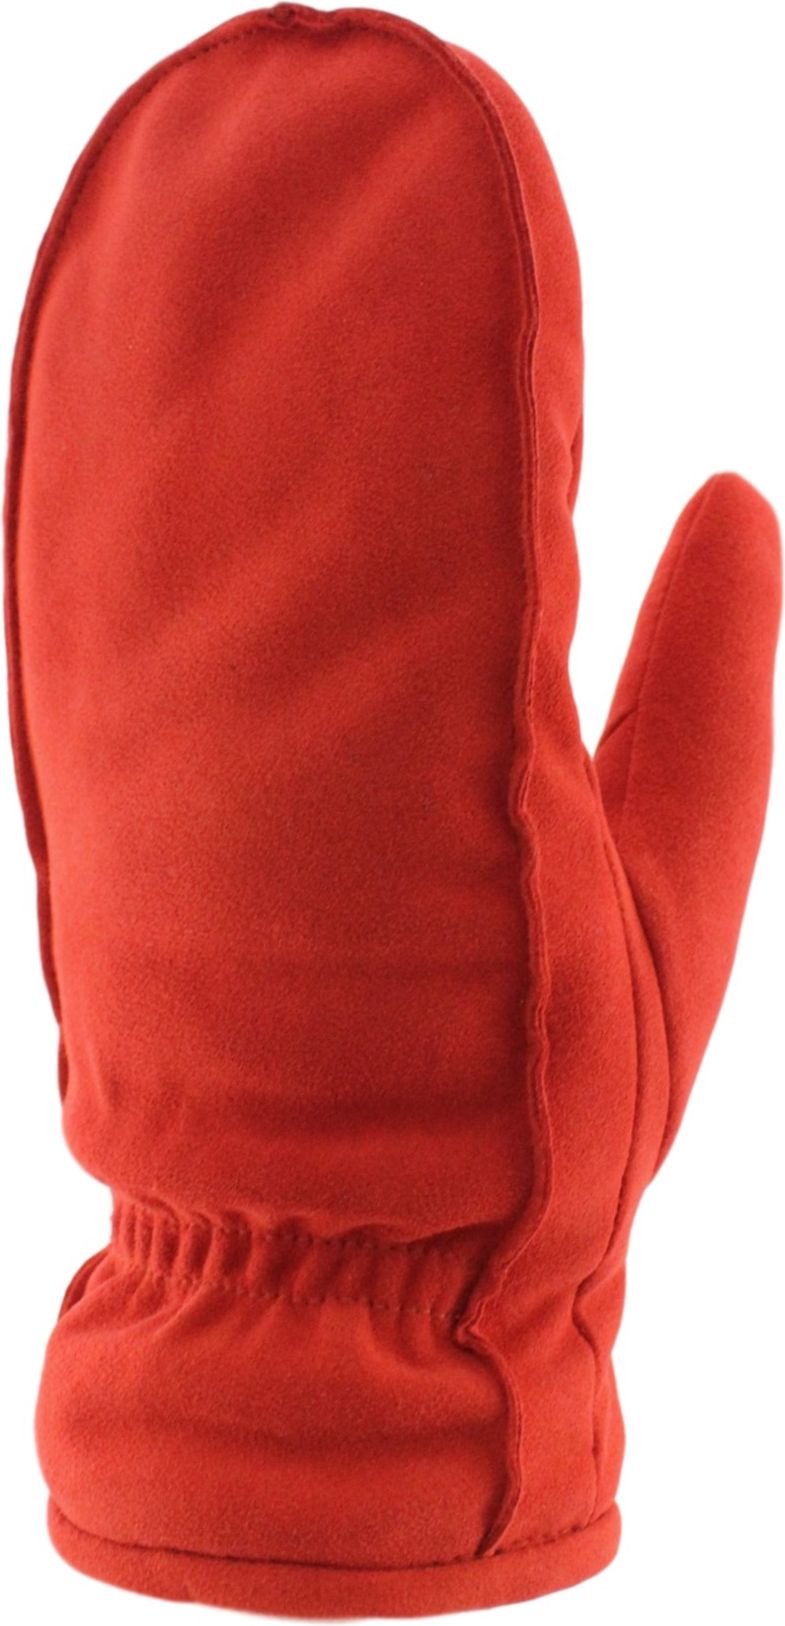 Ladies Suede Mitt With Glove Liner Red